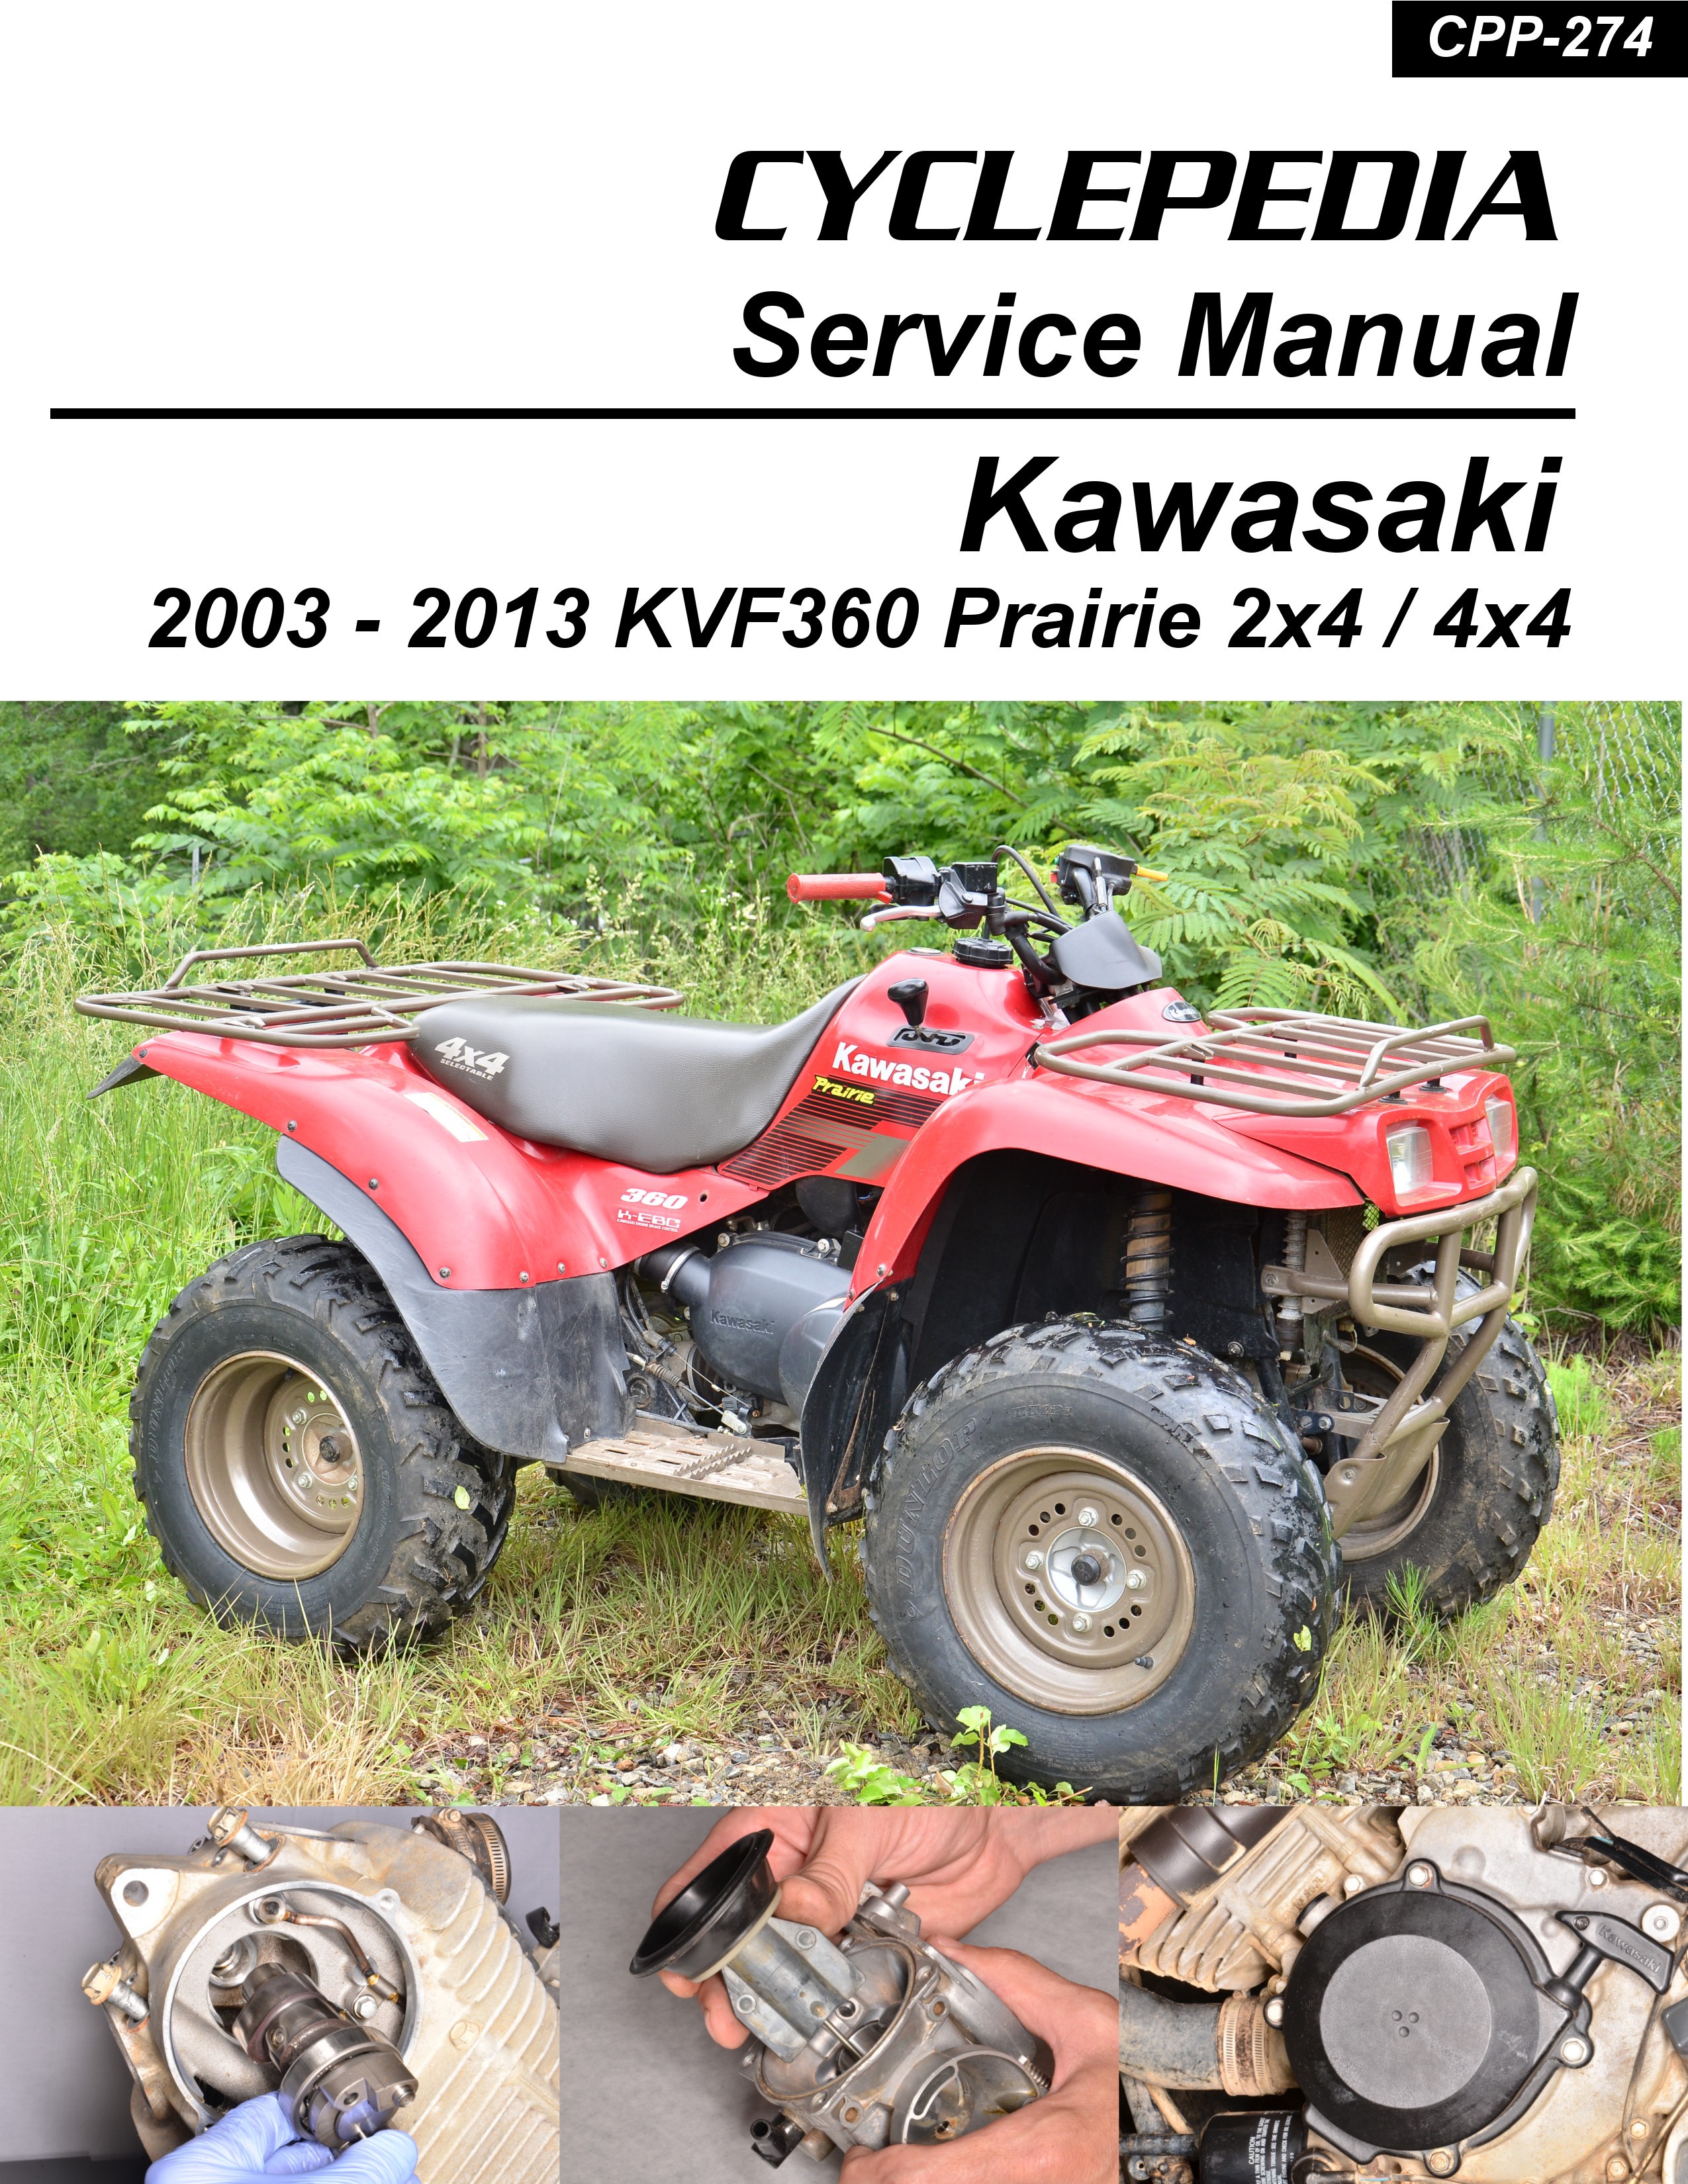 IGNITION KEY SWITCH KAWASAKI KVF360 PRAIRIE 360 2003-2009 ATV NEW